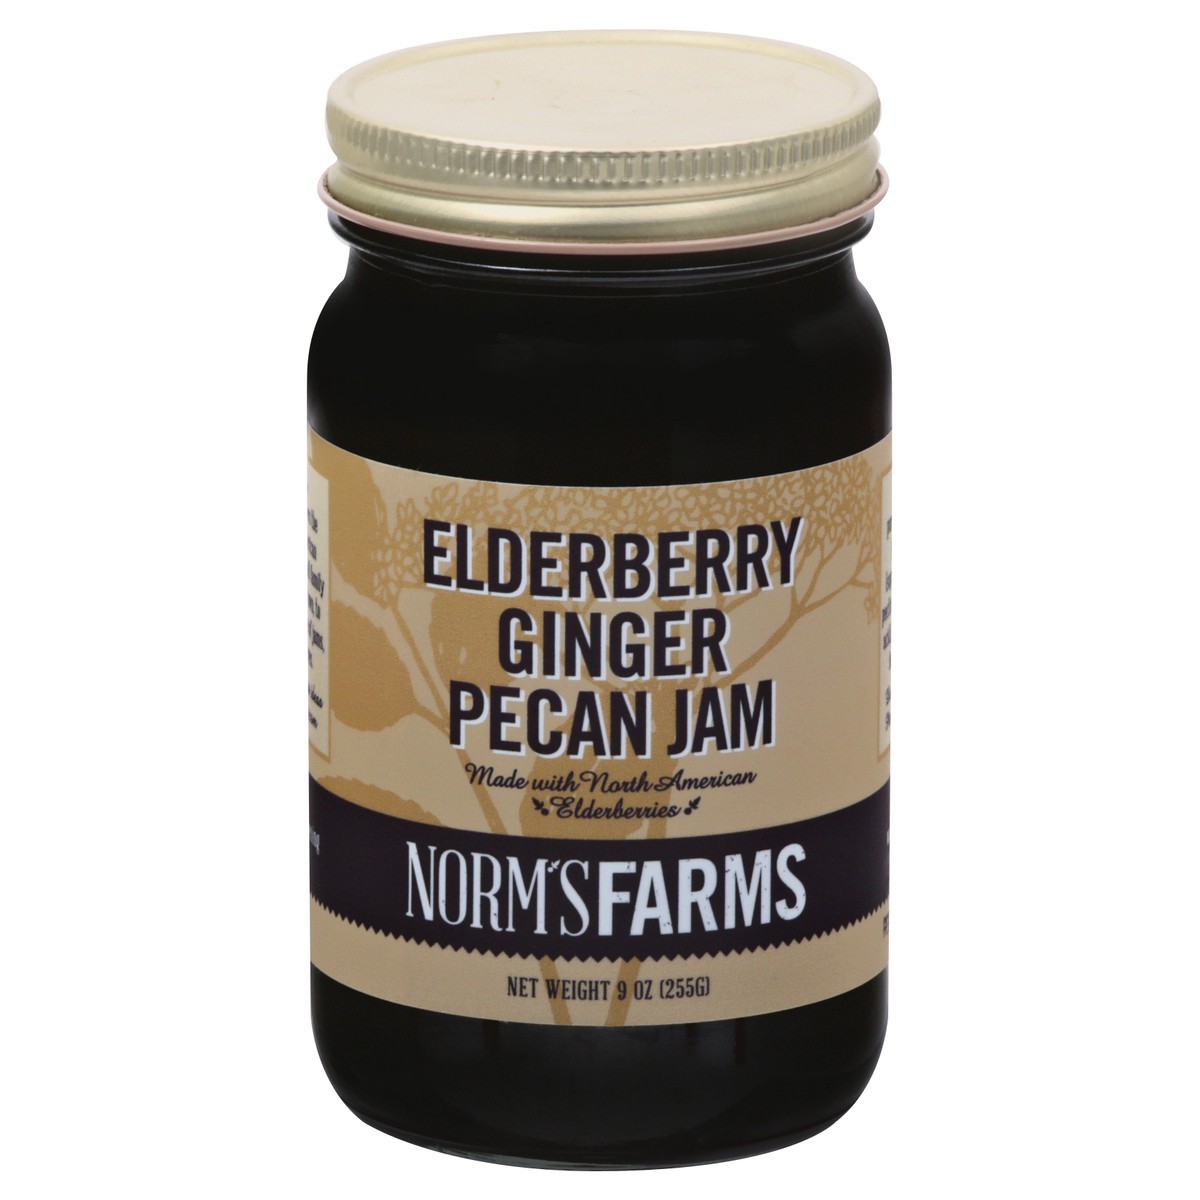 slide 3 of 13, Norm's Farms Elderberry Ginger Pecan Jam 9 oz, 9 oz